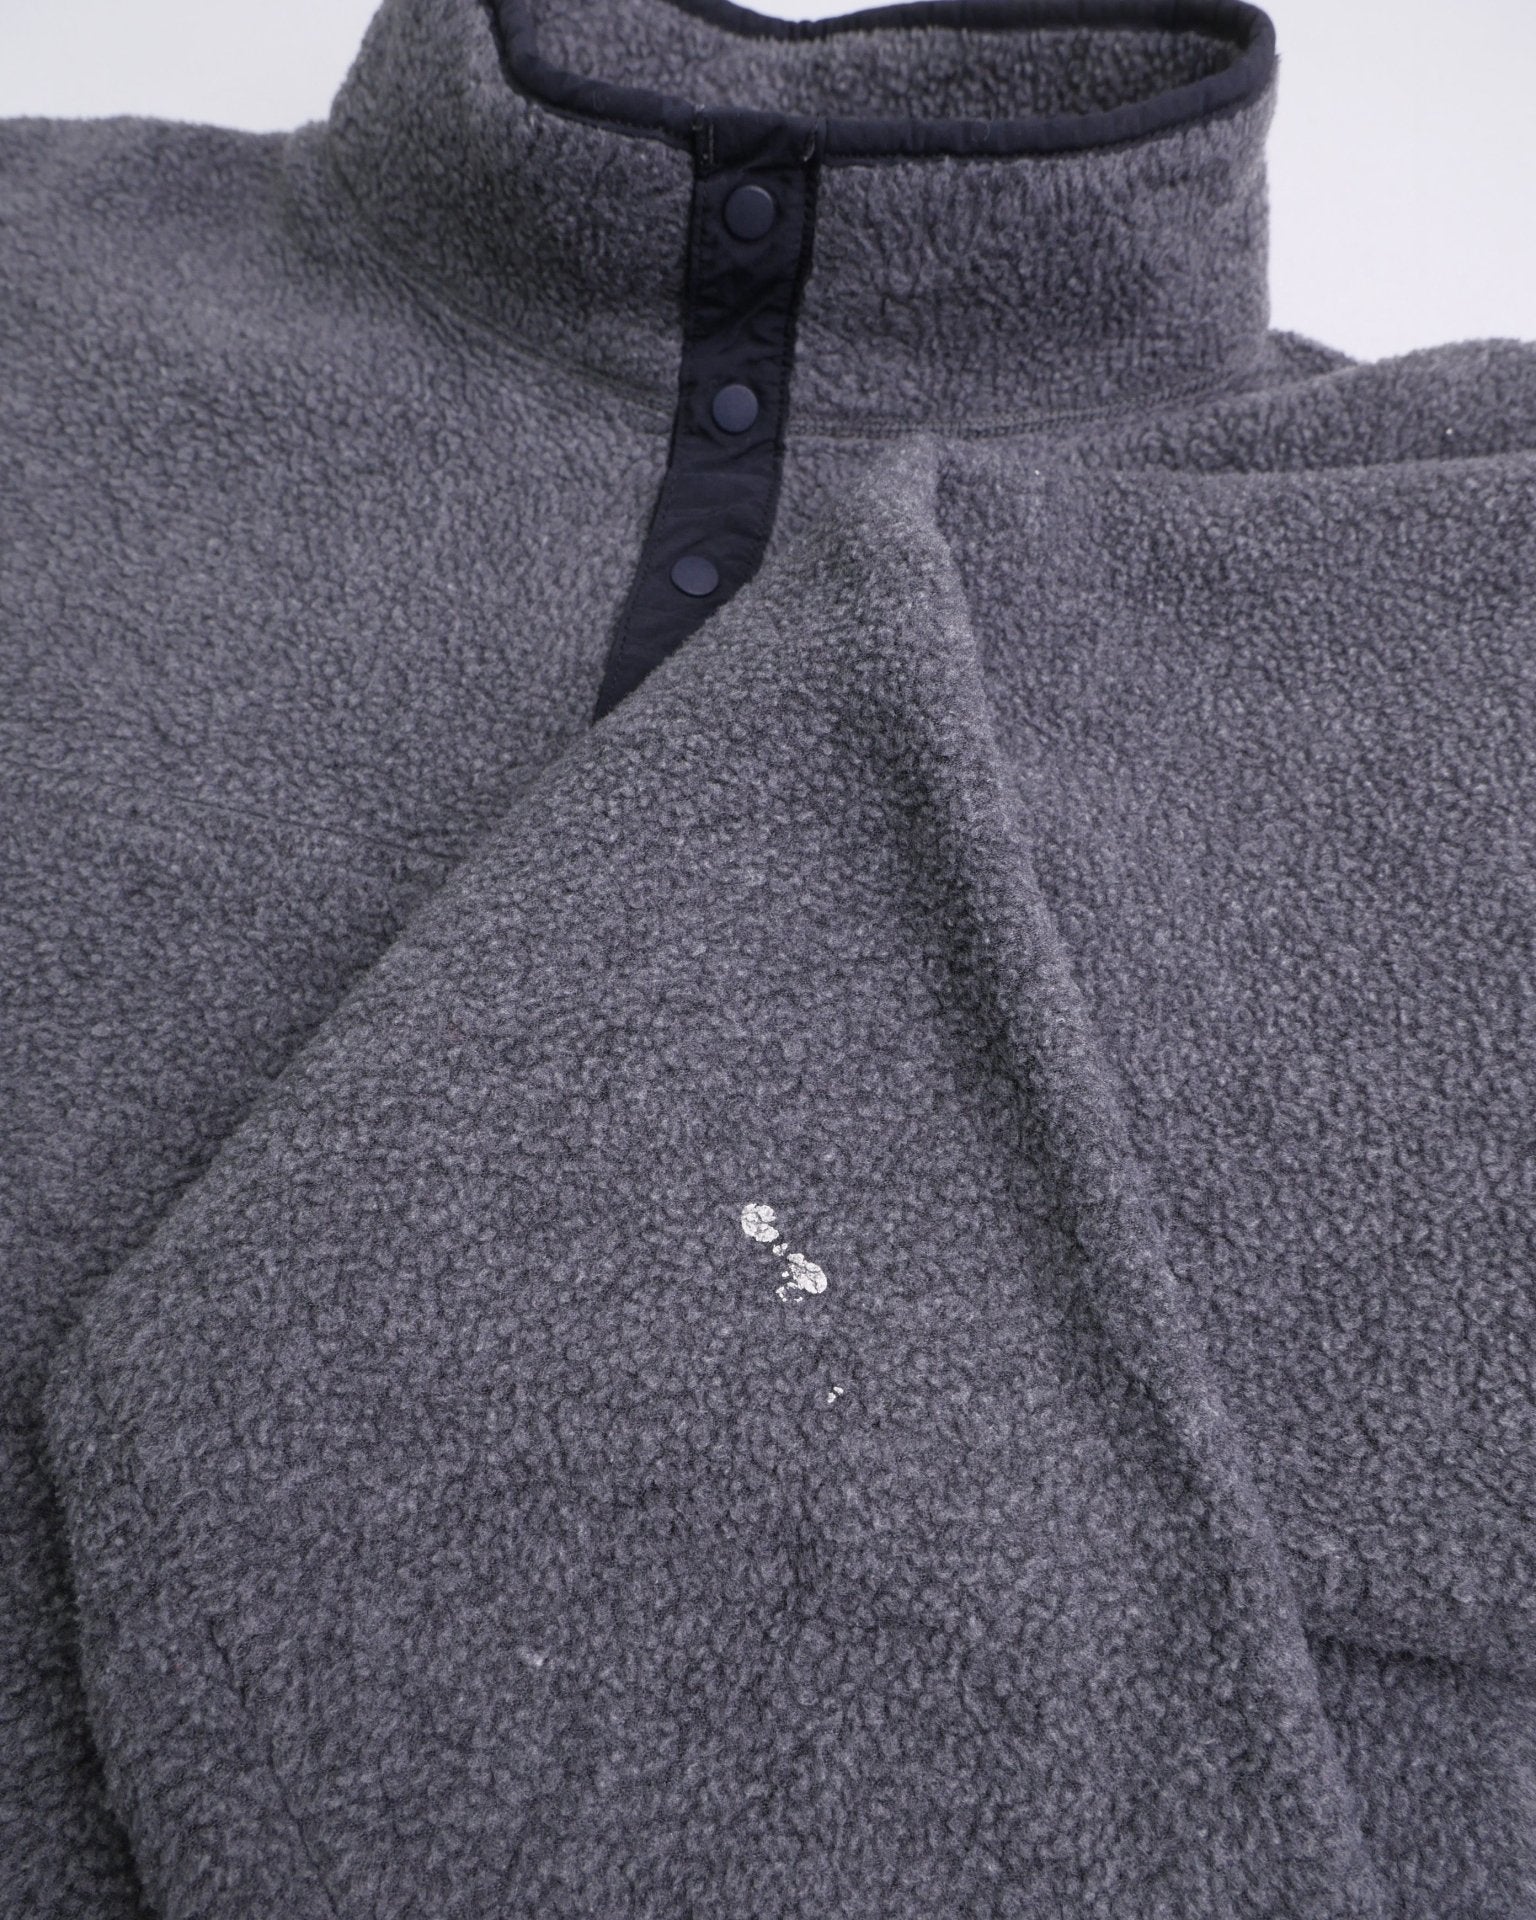 LL Bean dark grey half buttoned Fleece Sweater - Peeces